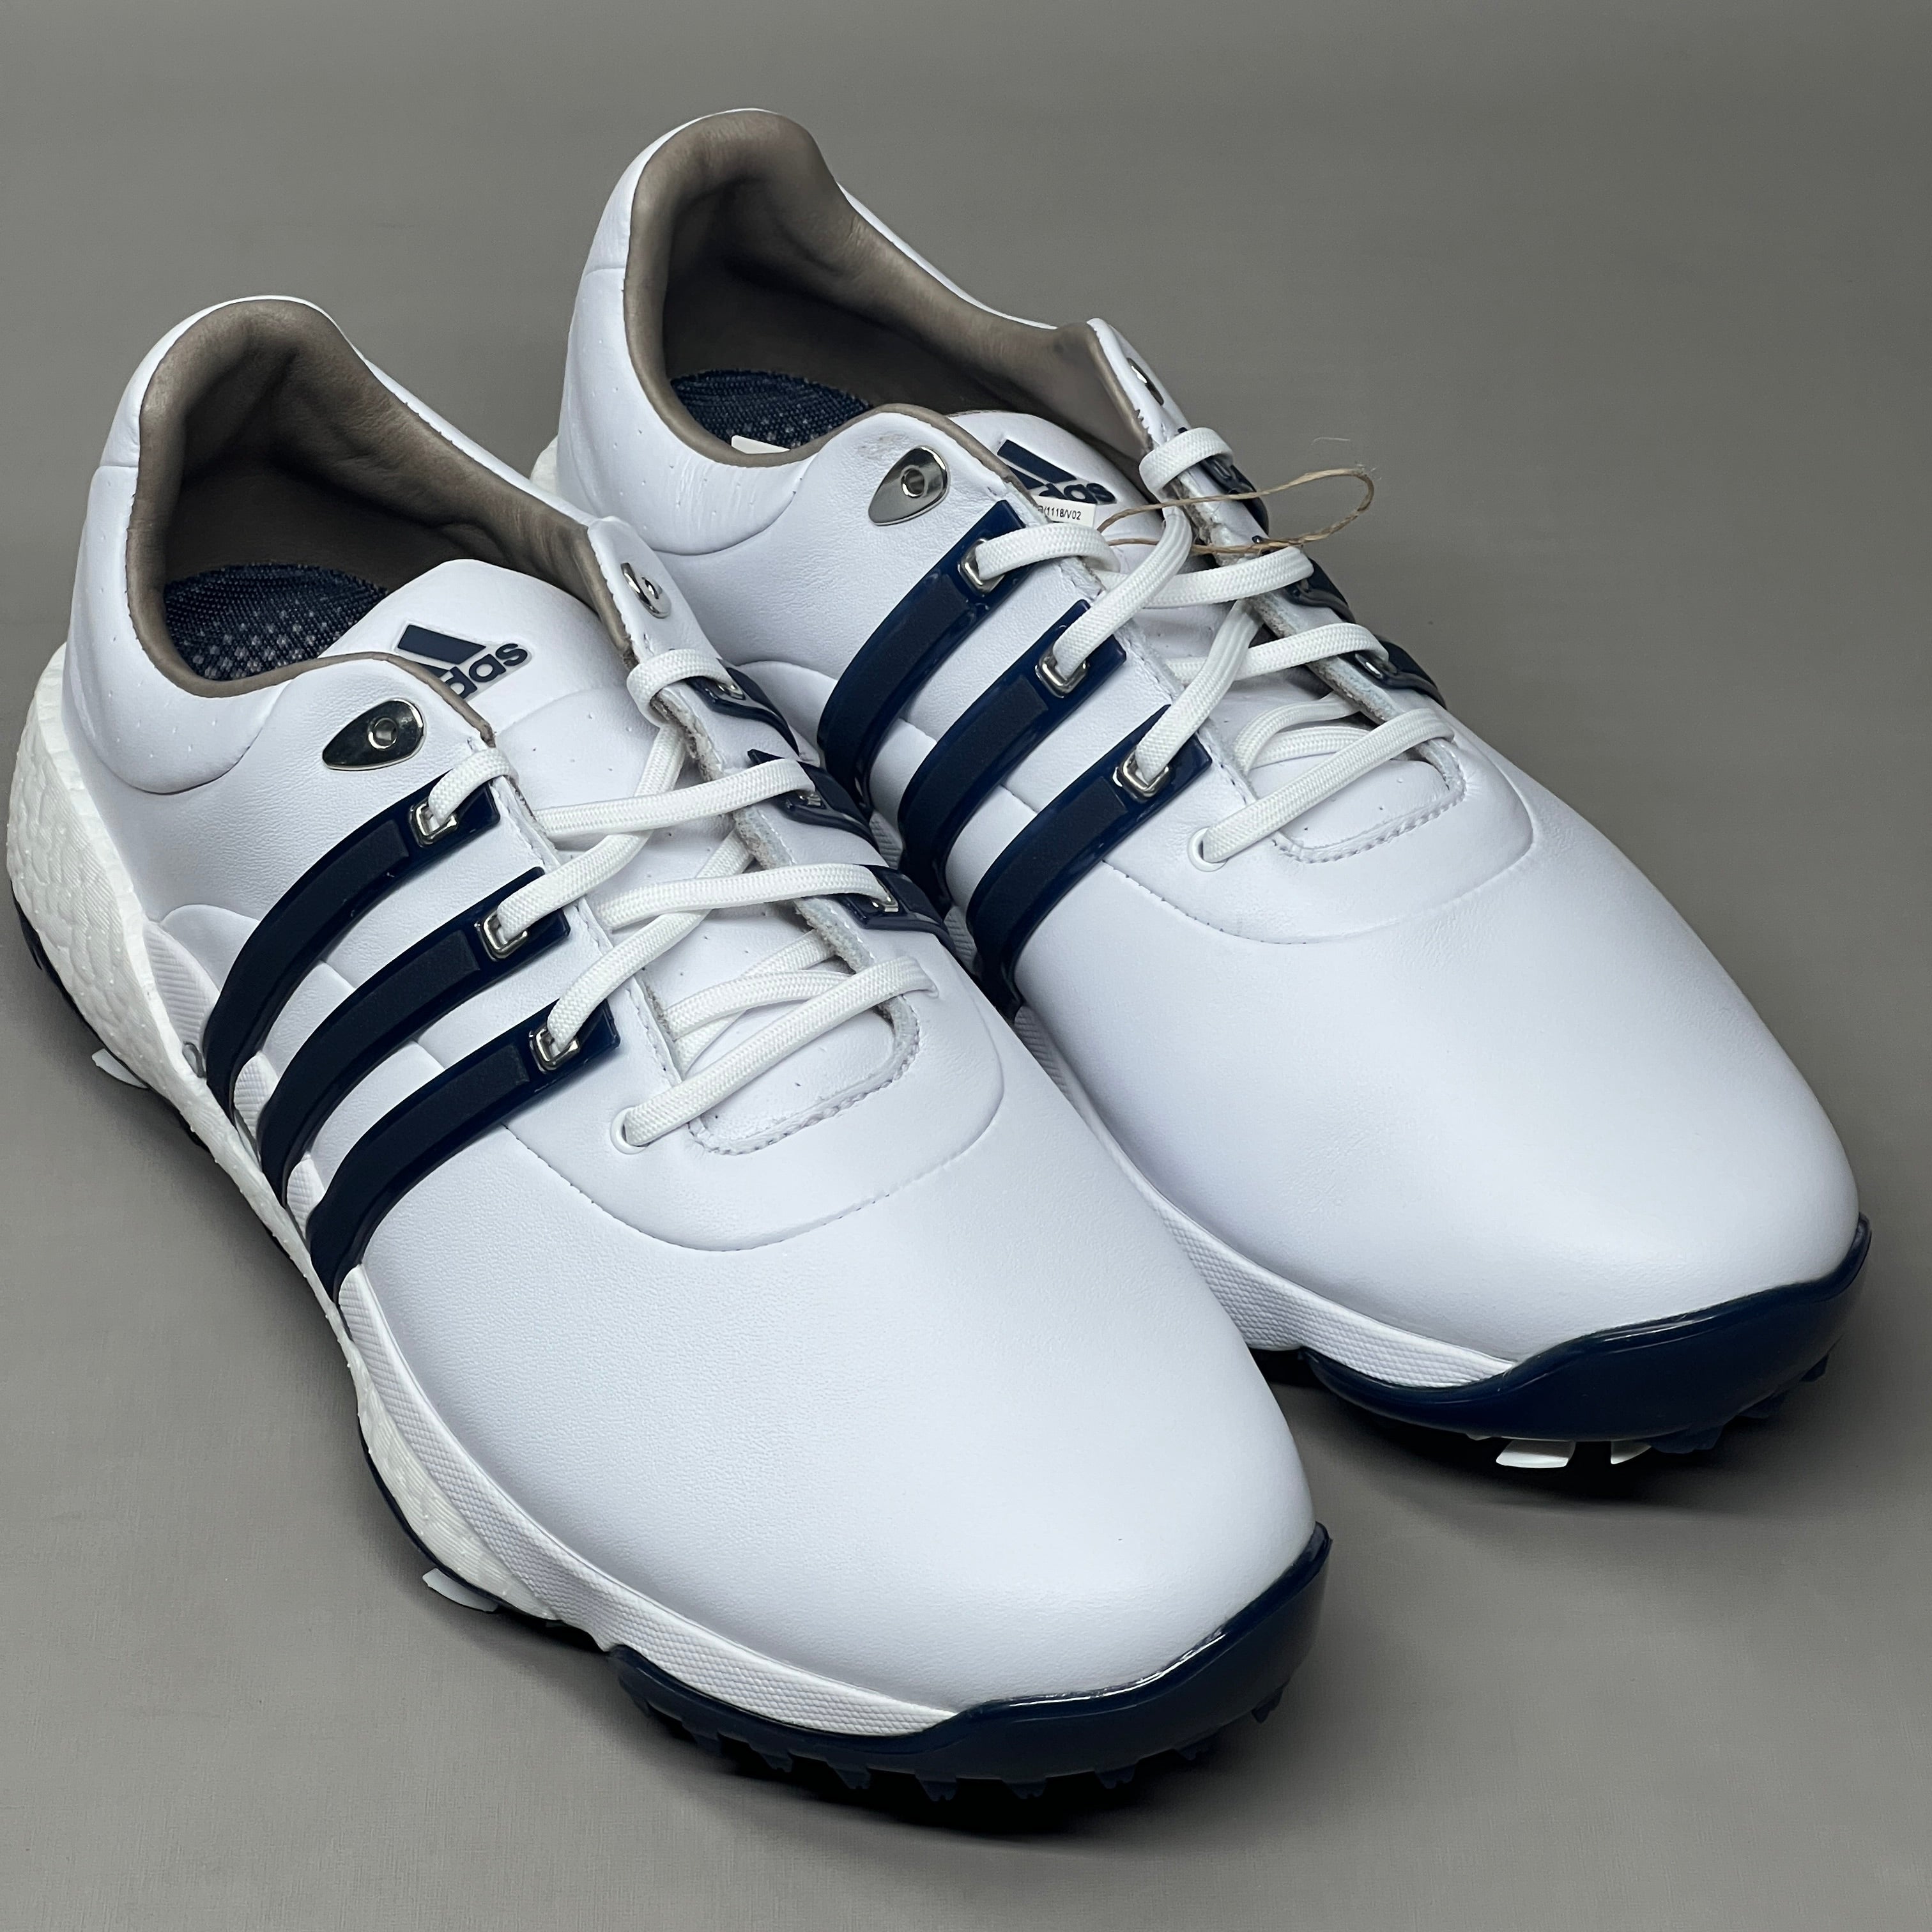 Lure Blandet prototype ADIDAS Golf Shoes TOUR360 22 Leather Men's Sz 8 White / Navy / Silver –  PayWut